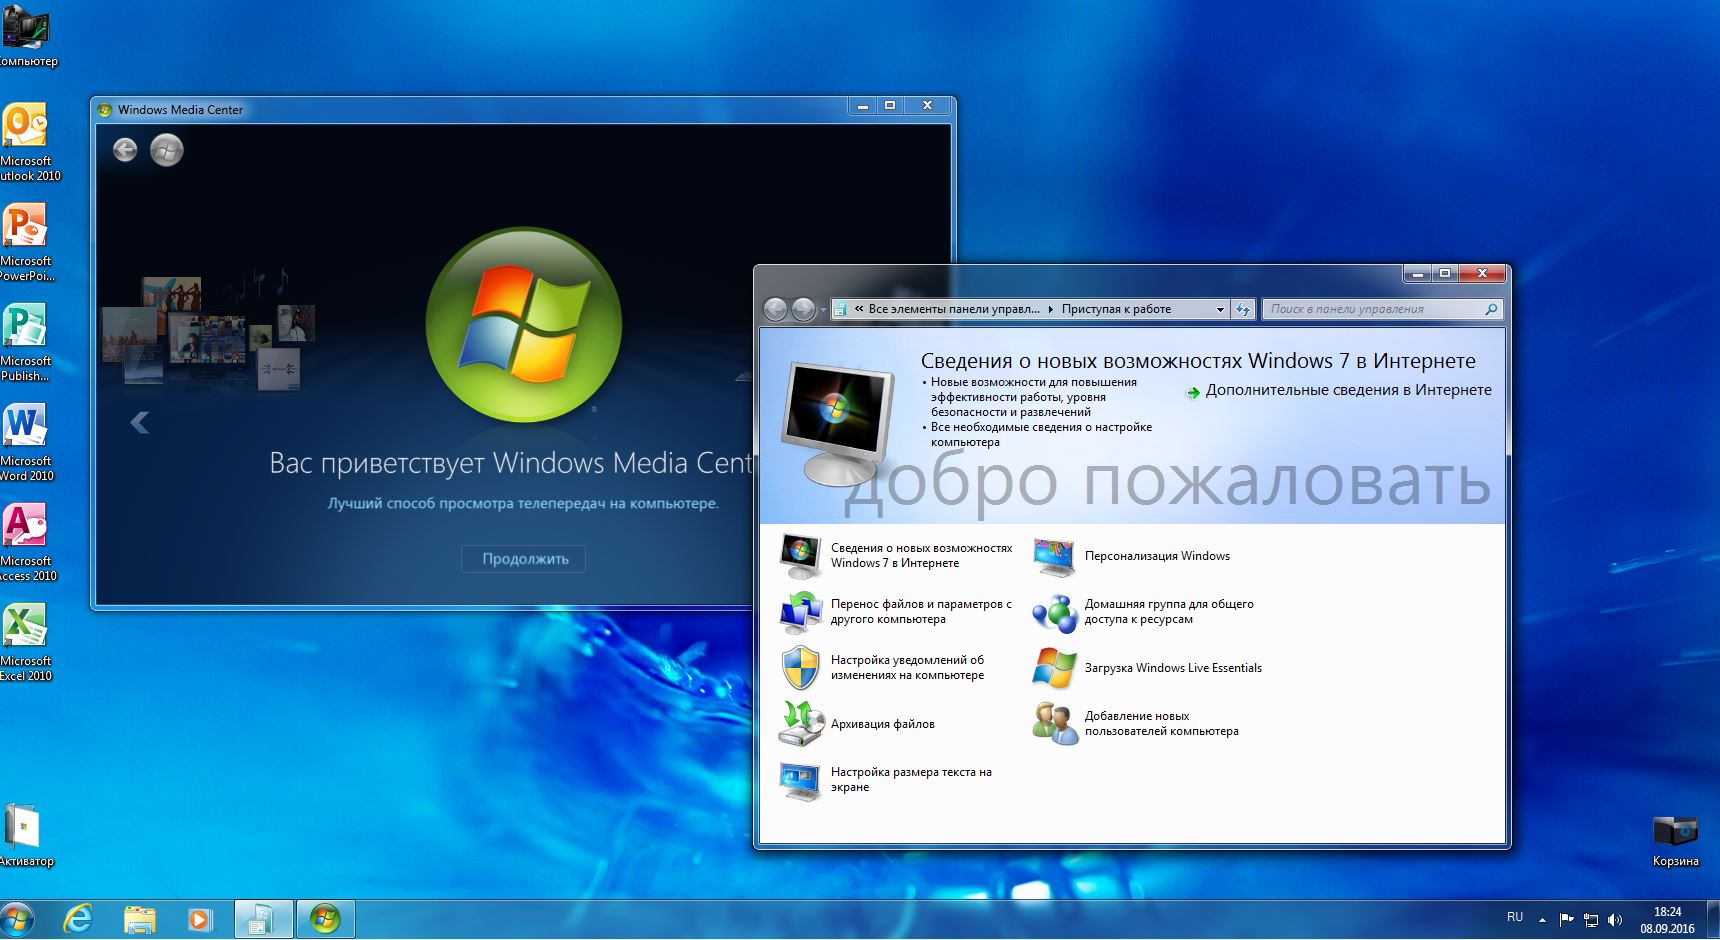 Windows 7 x86x64 Ultimate Office2010 v.74.16 - «Windows»